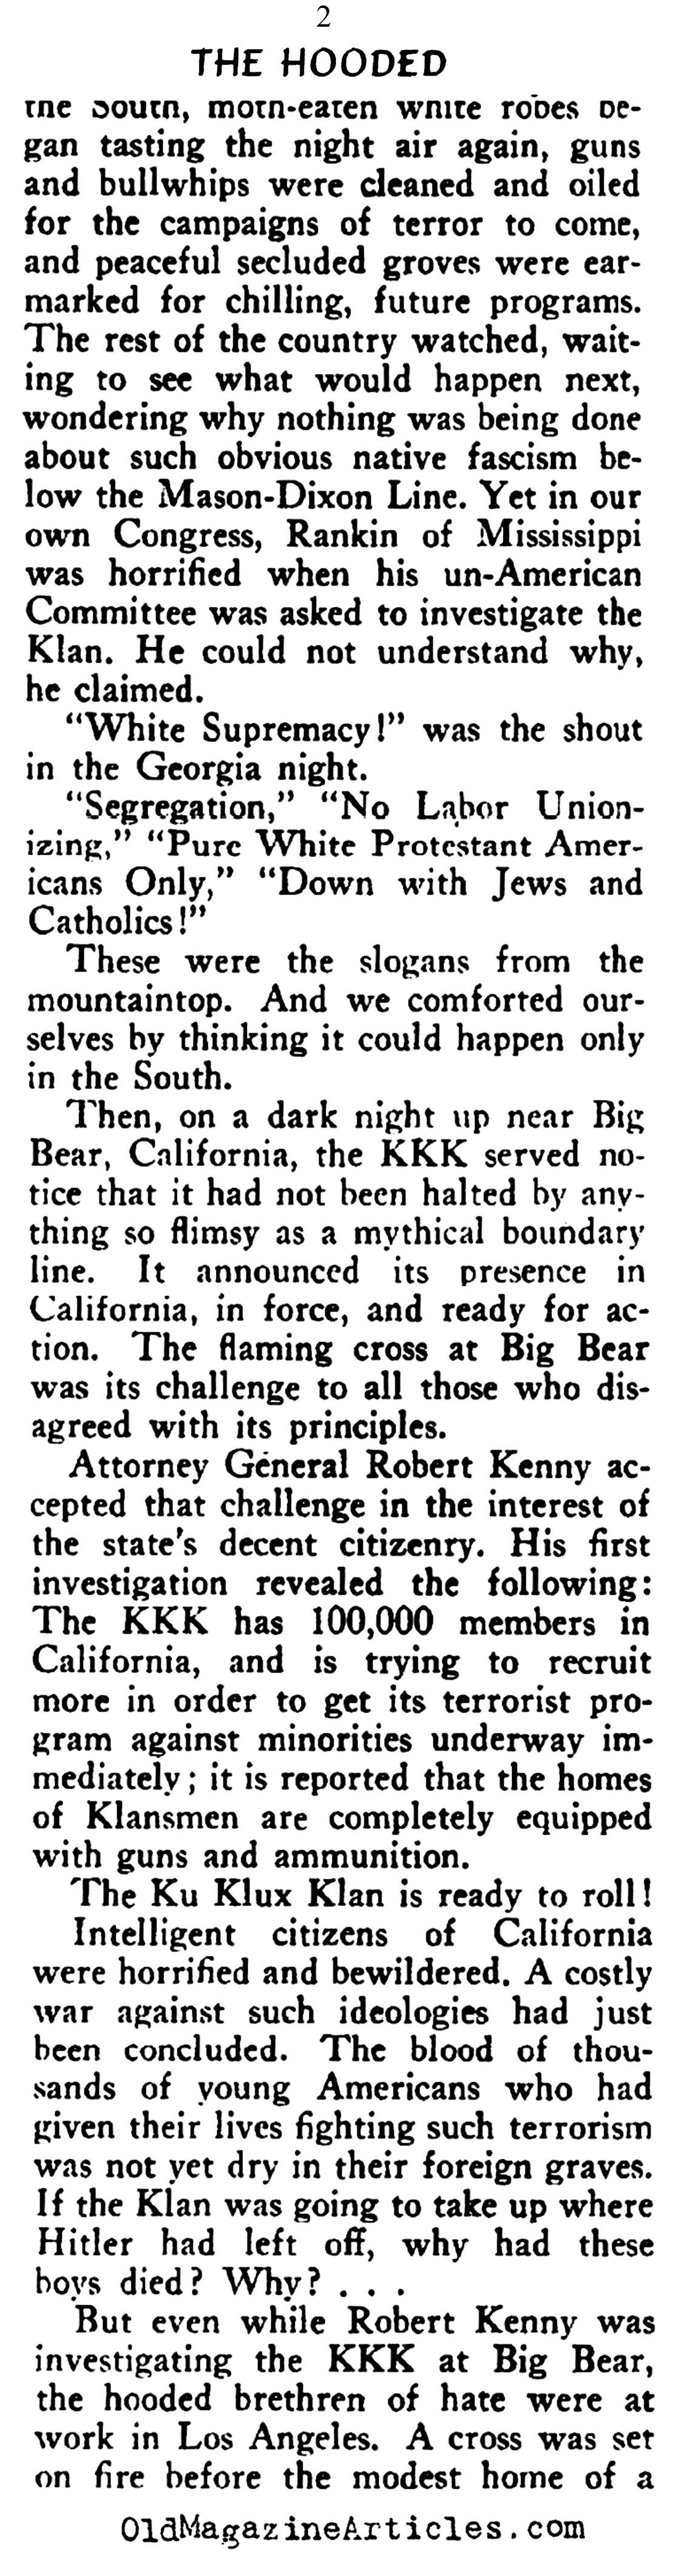 Post-War America and the KKK (Rob Wagner's Script Magazine, 1946)